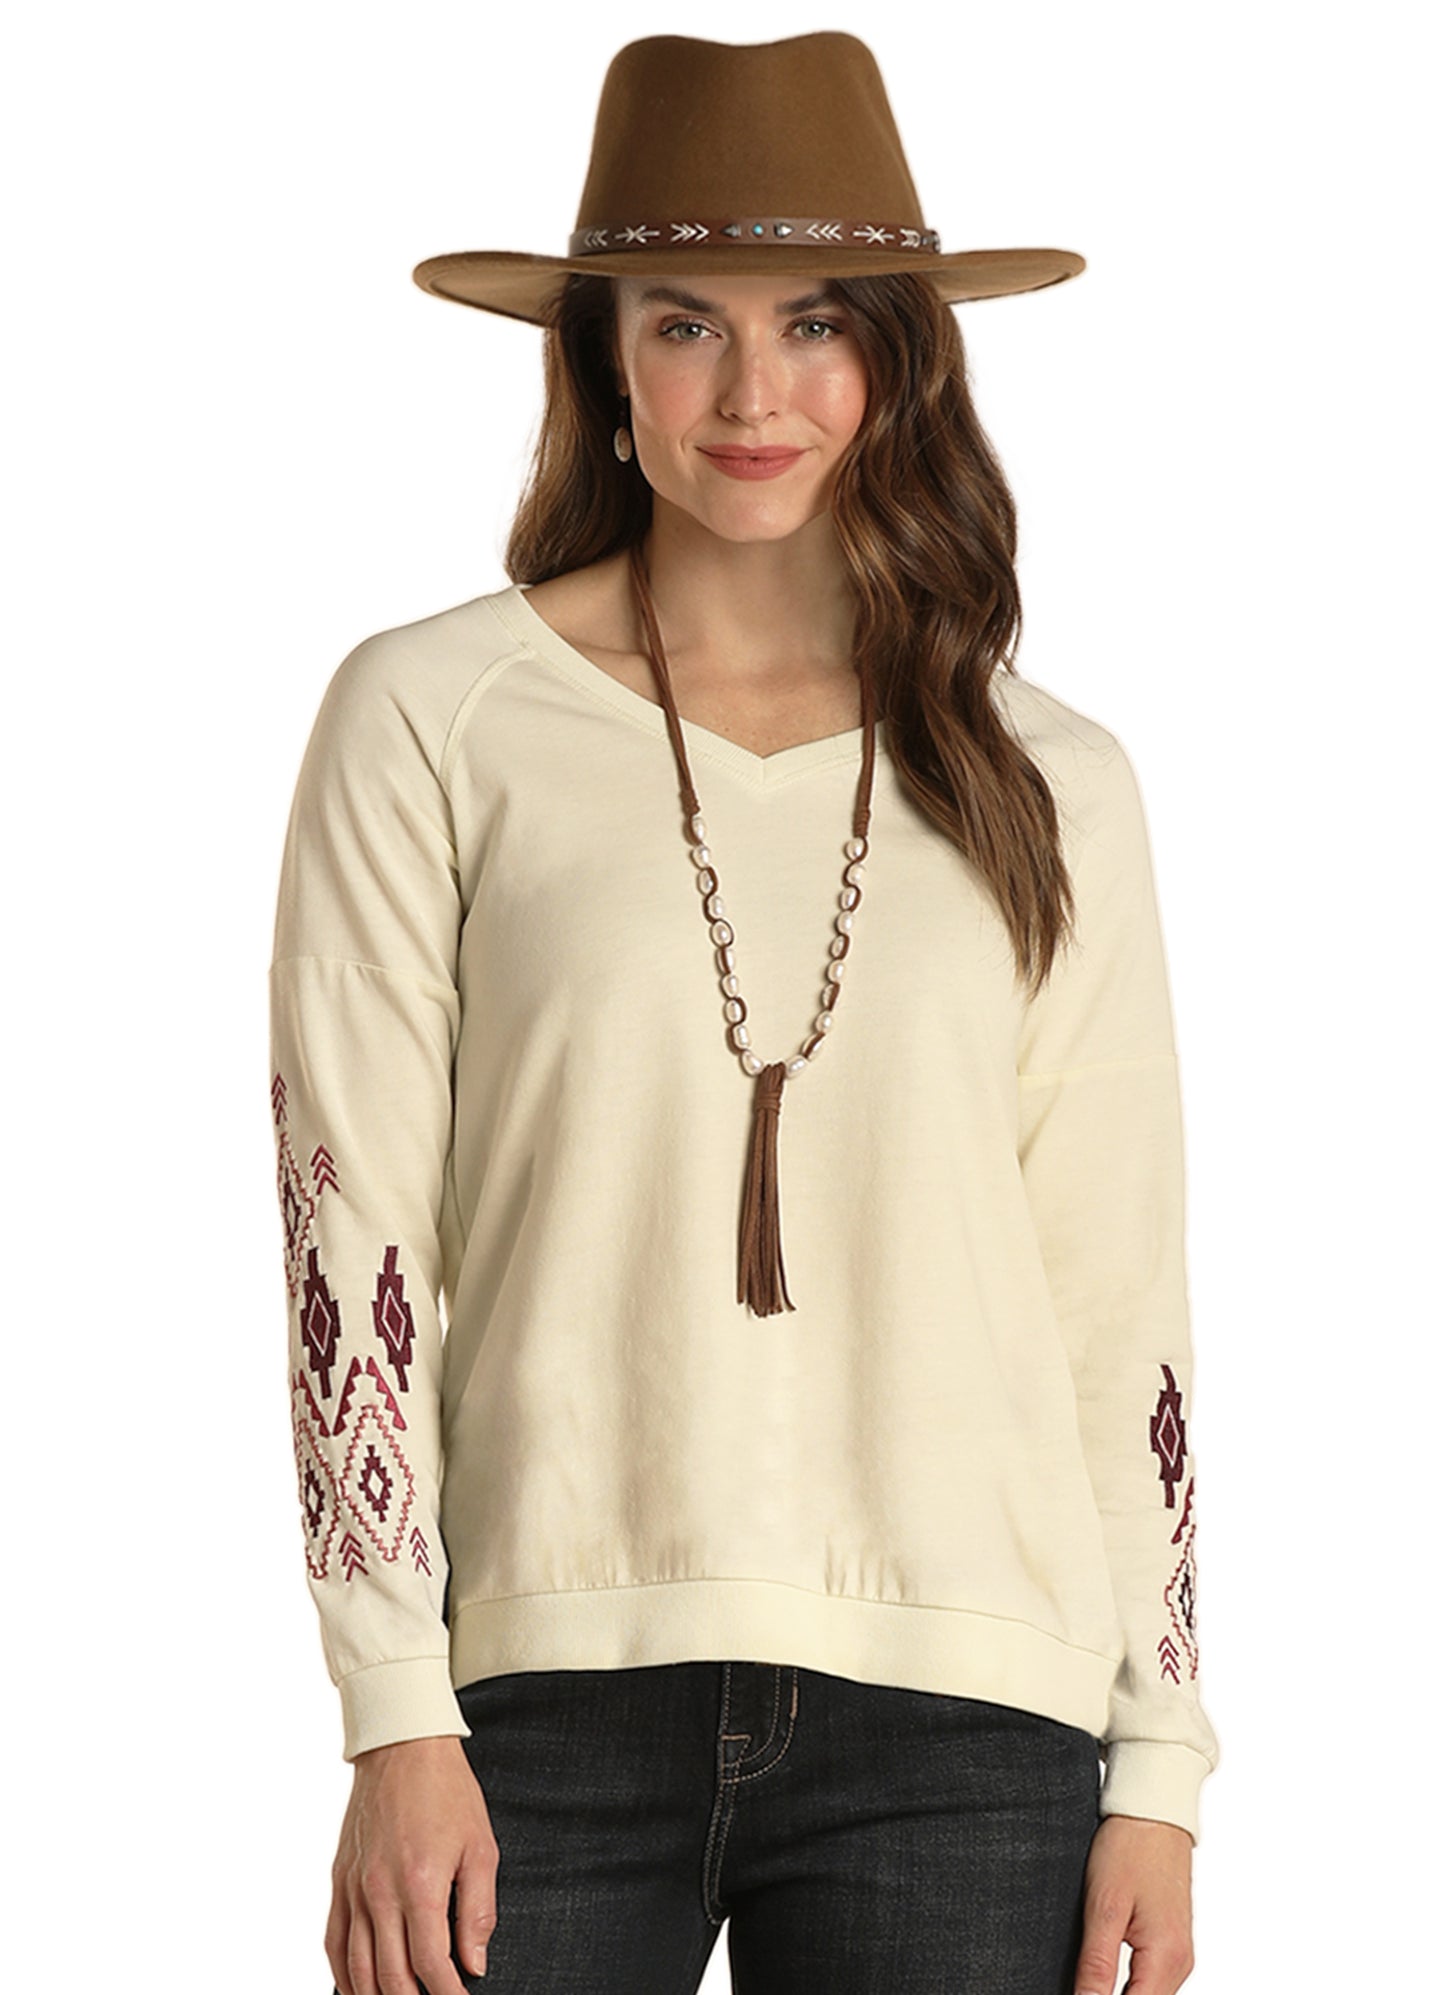 Rock & Roll Panhandle Women's Embroidered Sleeve Sweatshirt Cream